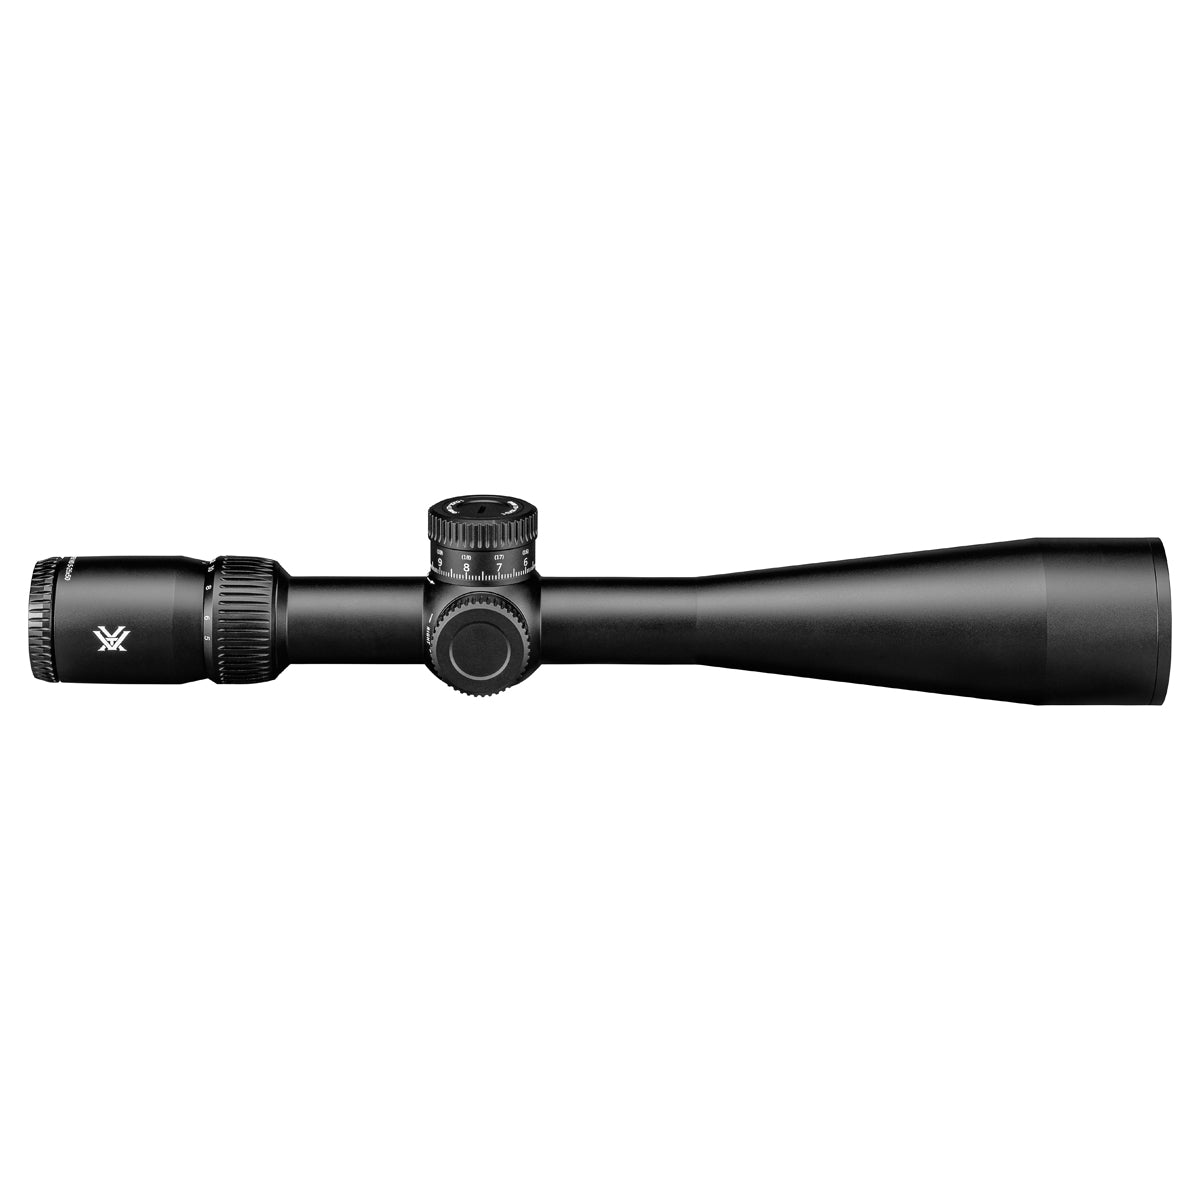 Vortex Viper HD 5-25x50 VMR-3 MRAD Riflescope in  by GOHUNT | Vortex Optics - GOHUNT Shop